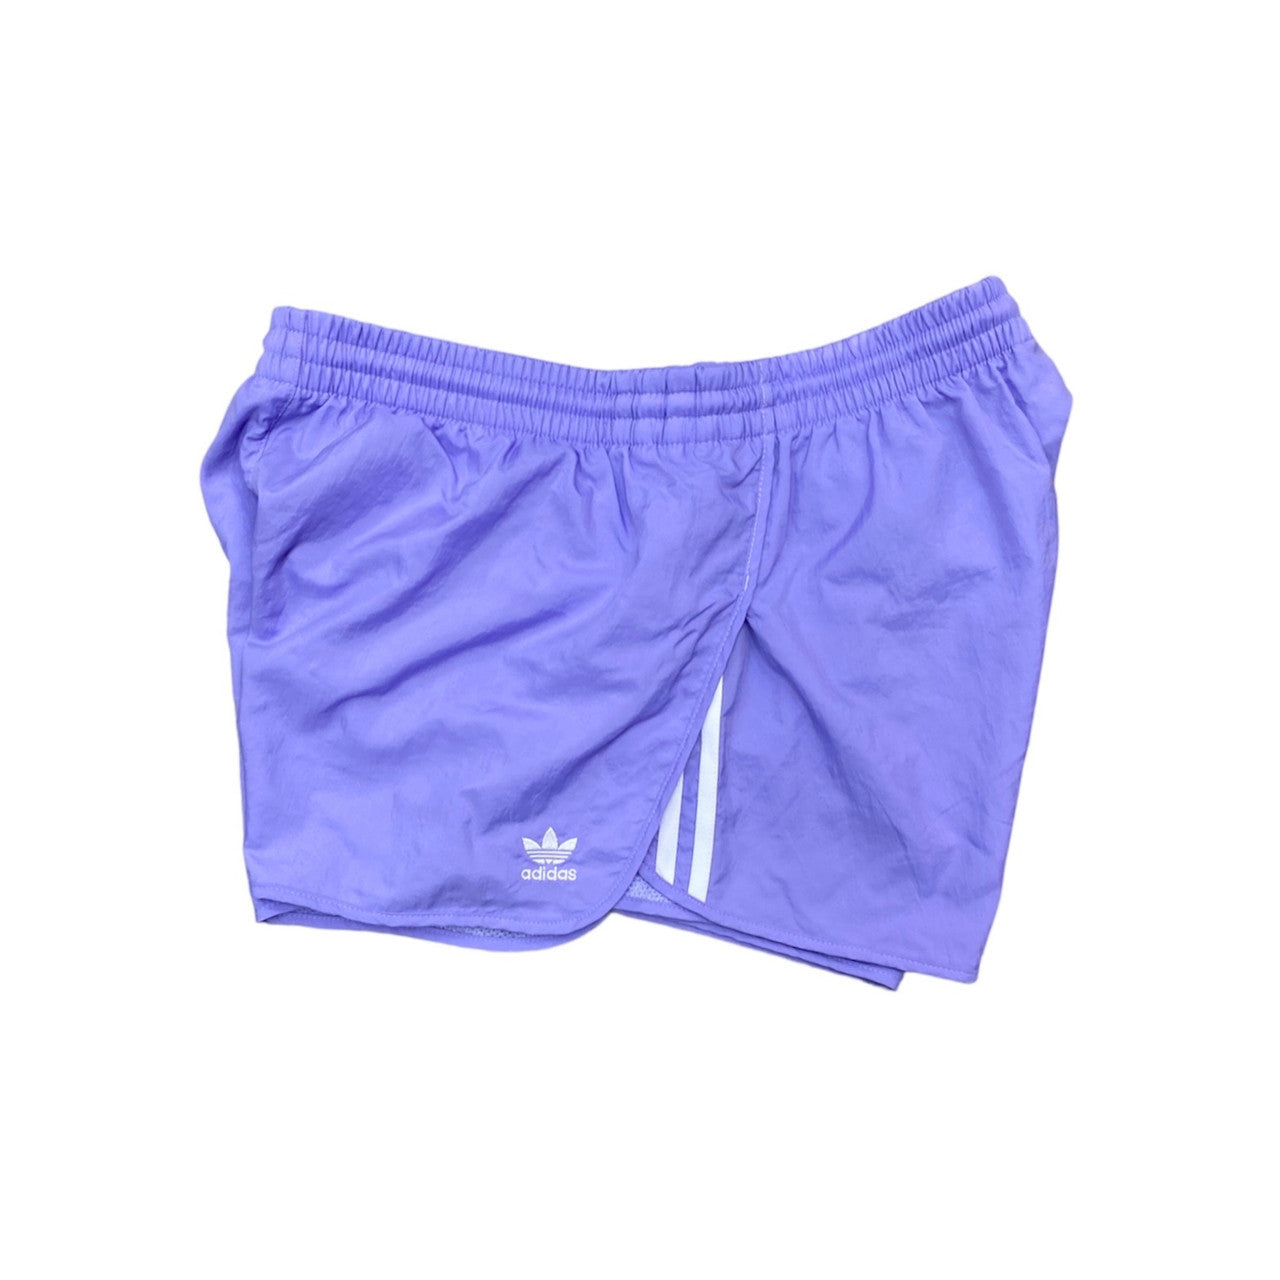 Adidas 3 Stripes Purple Running Shorts